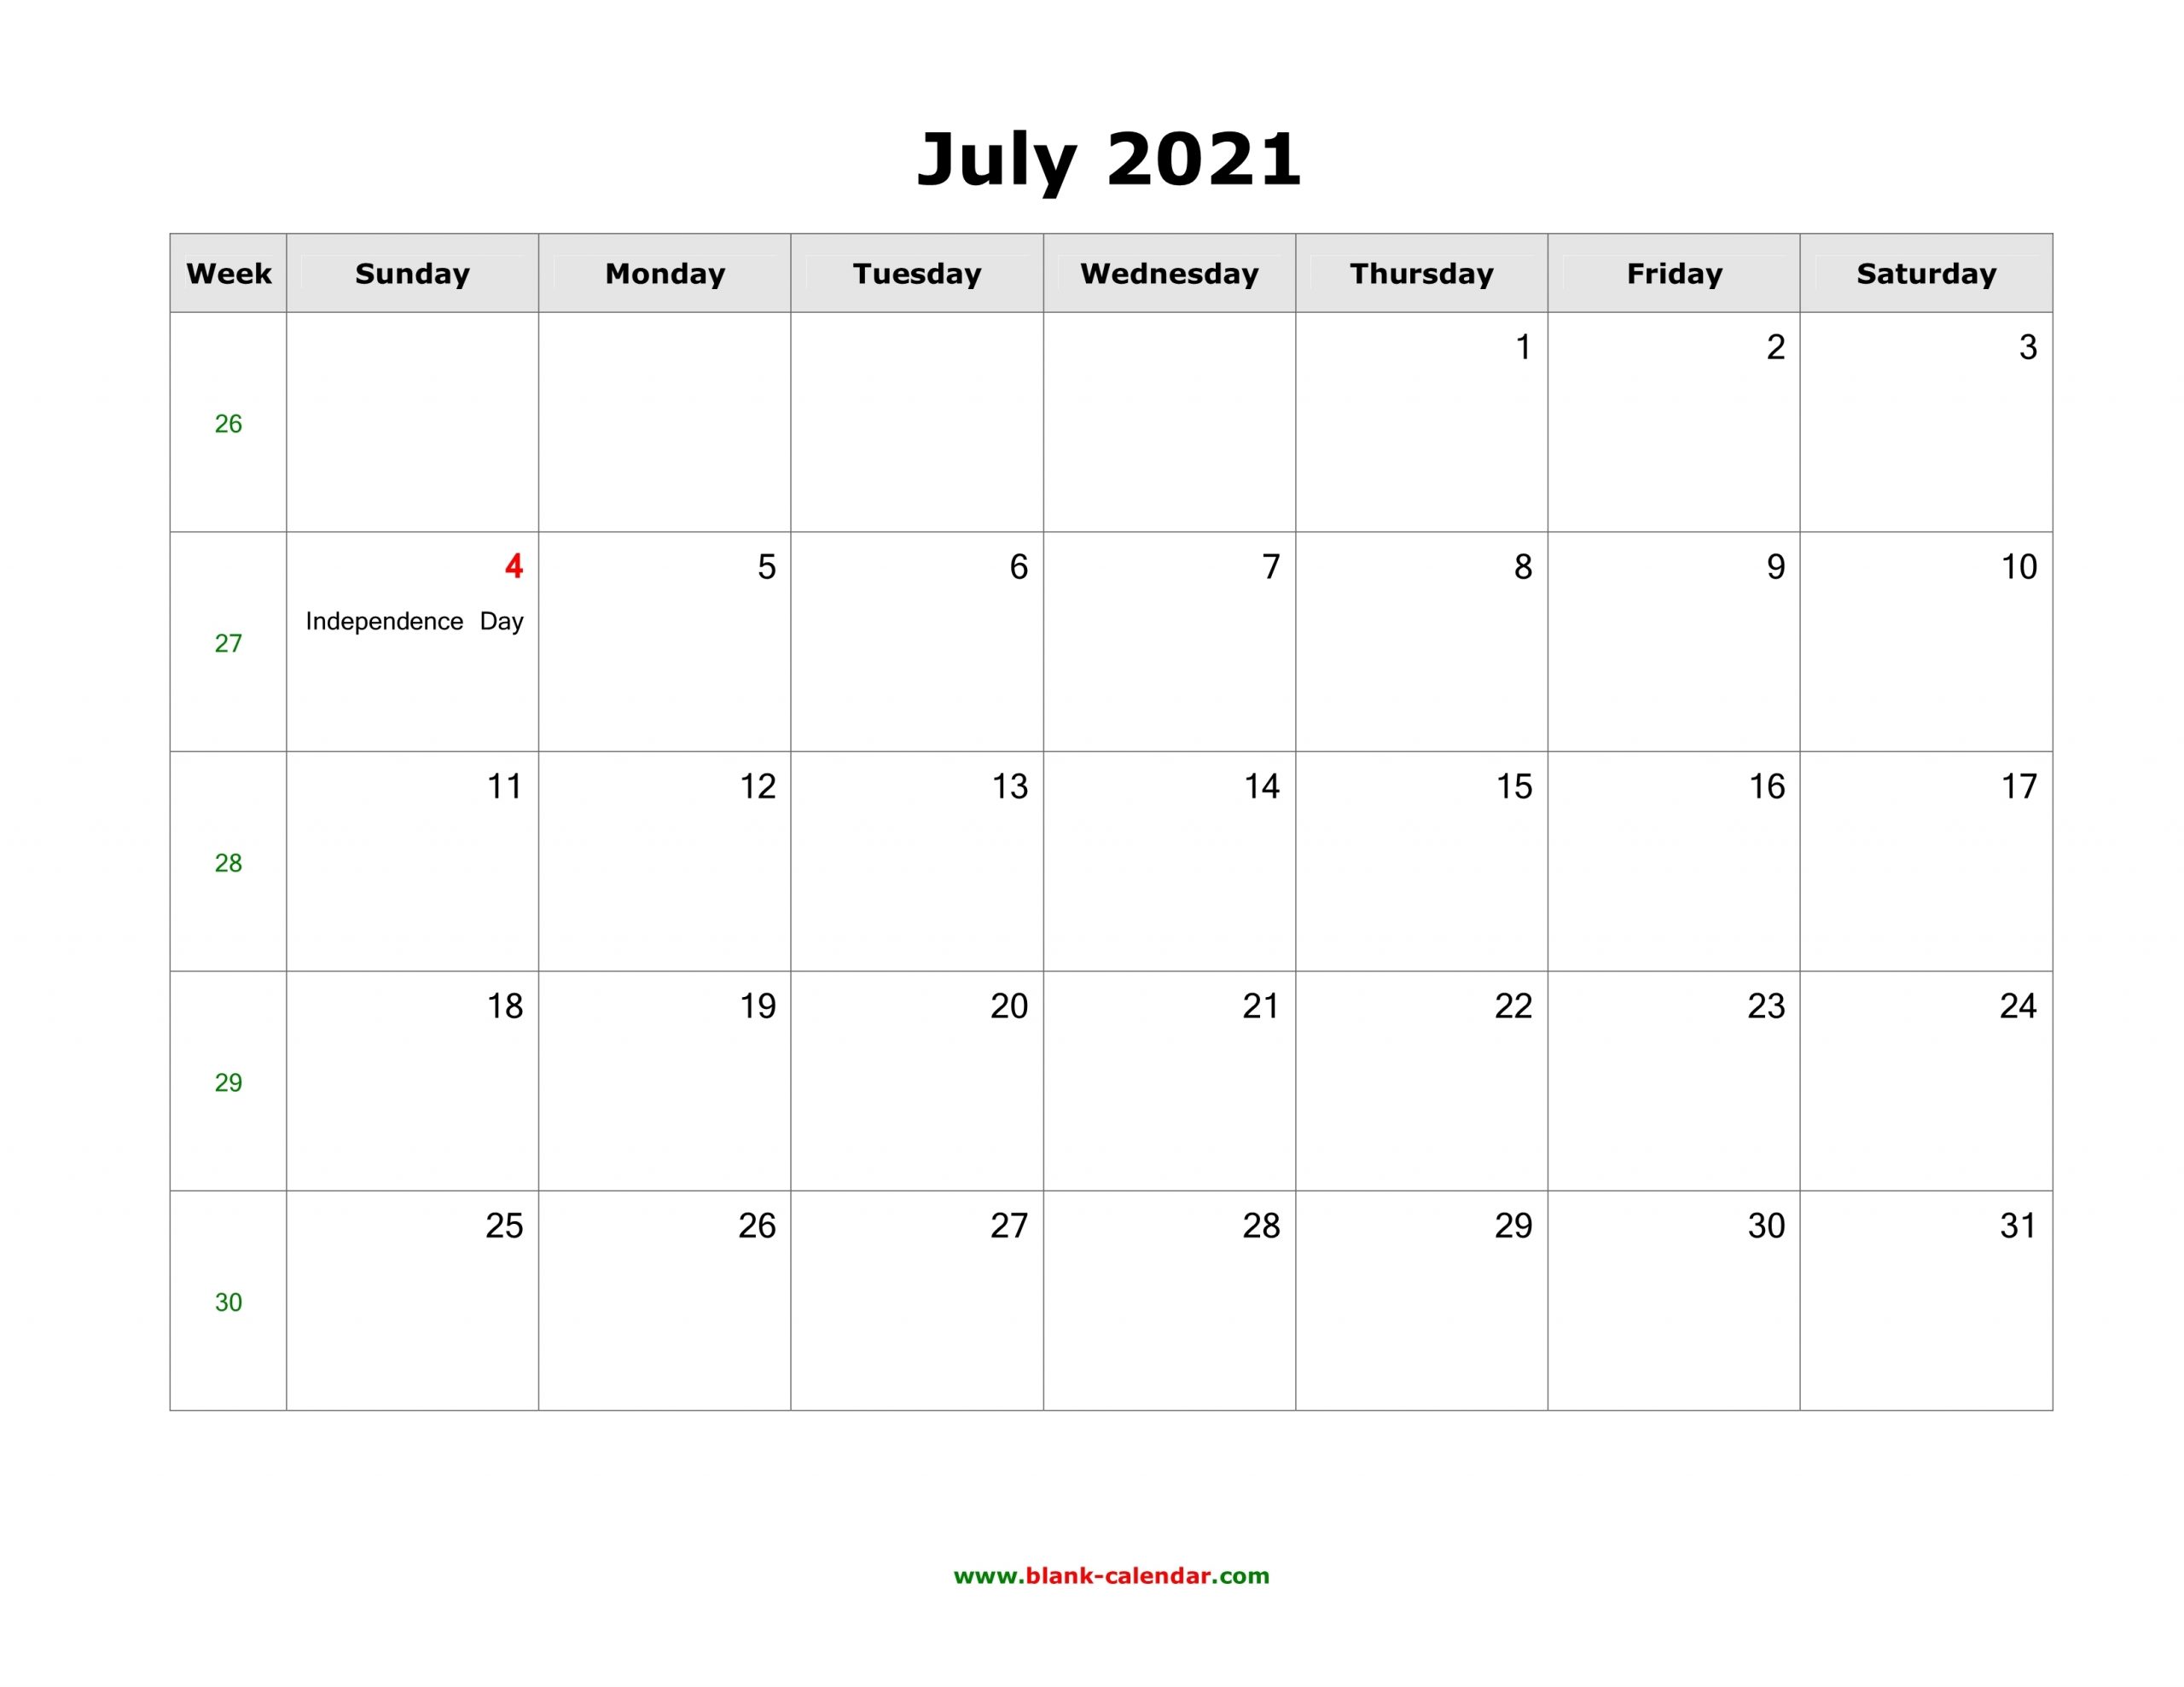 July 2021 Blank Calendar | Free Download Calendar Templates